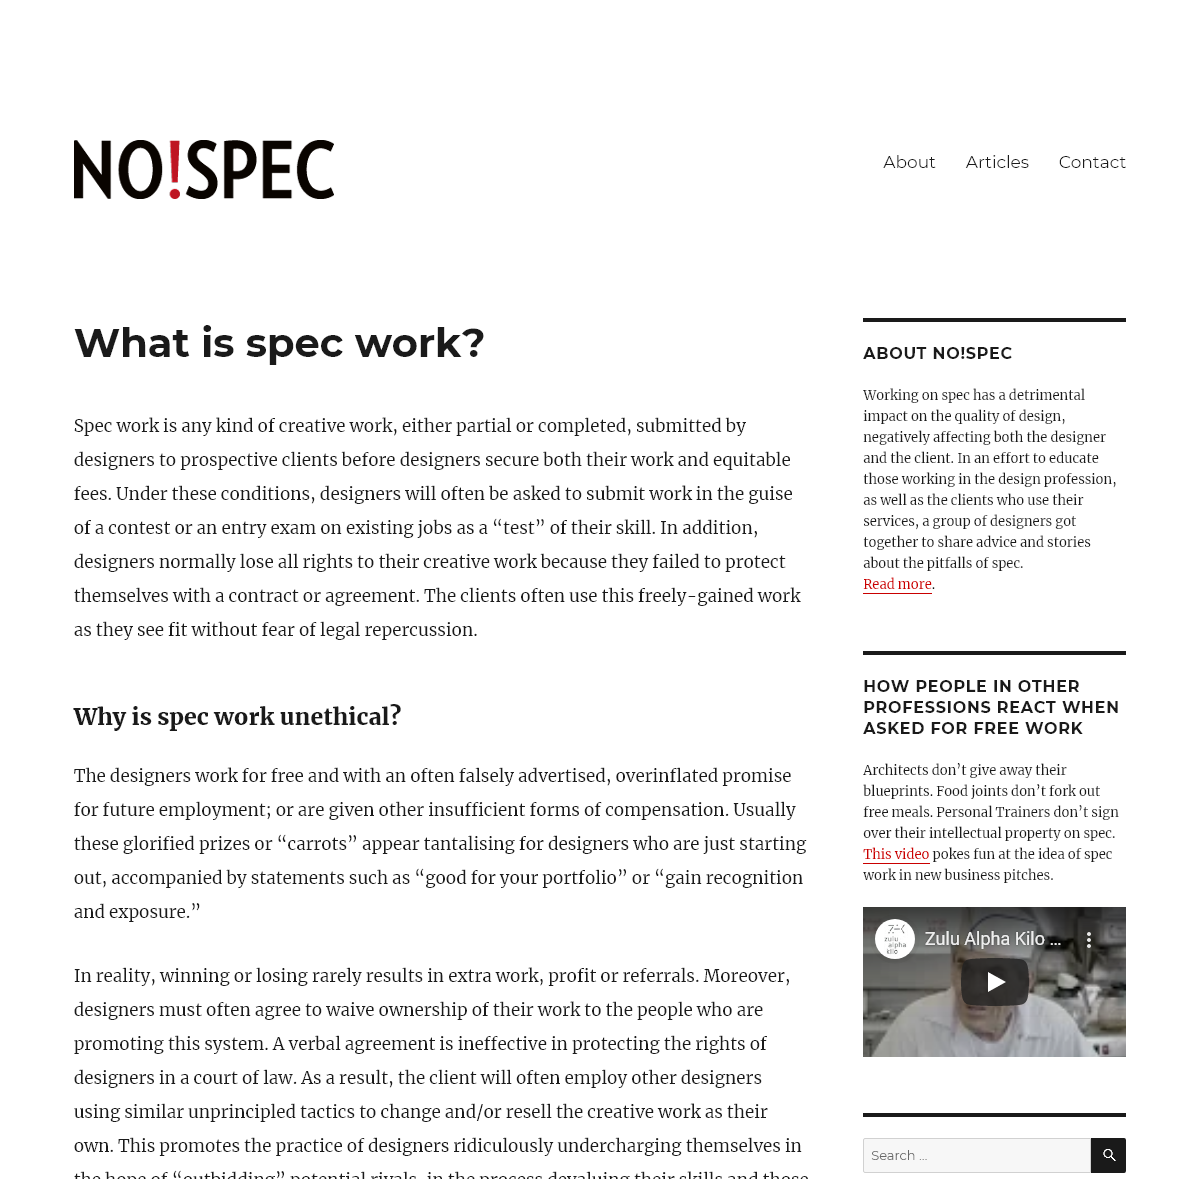 A complete backup of nospec.com